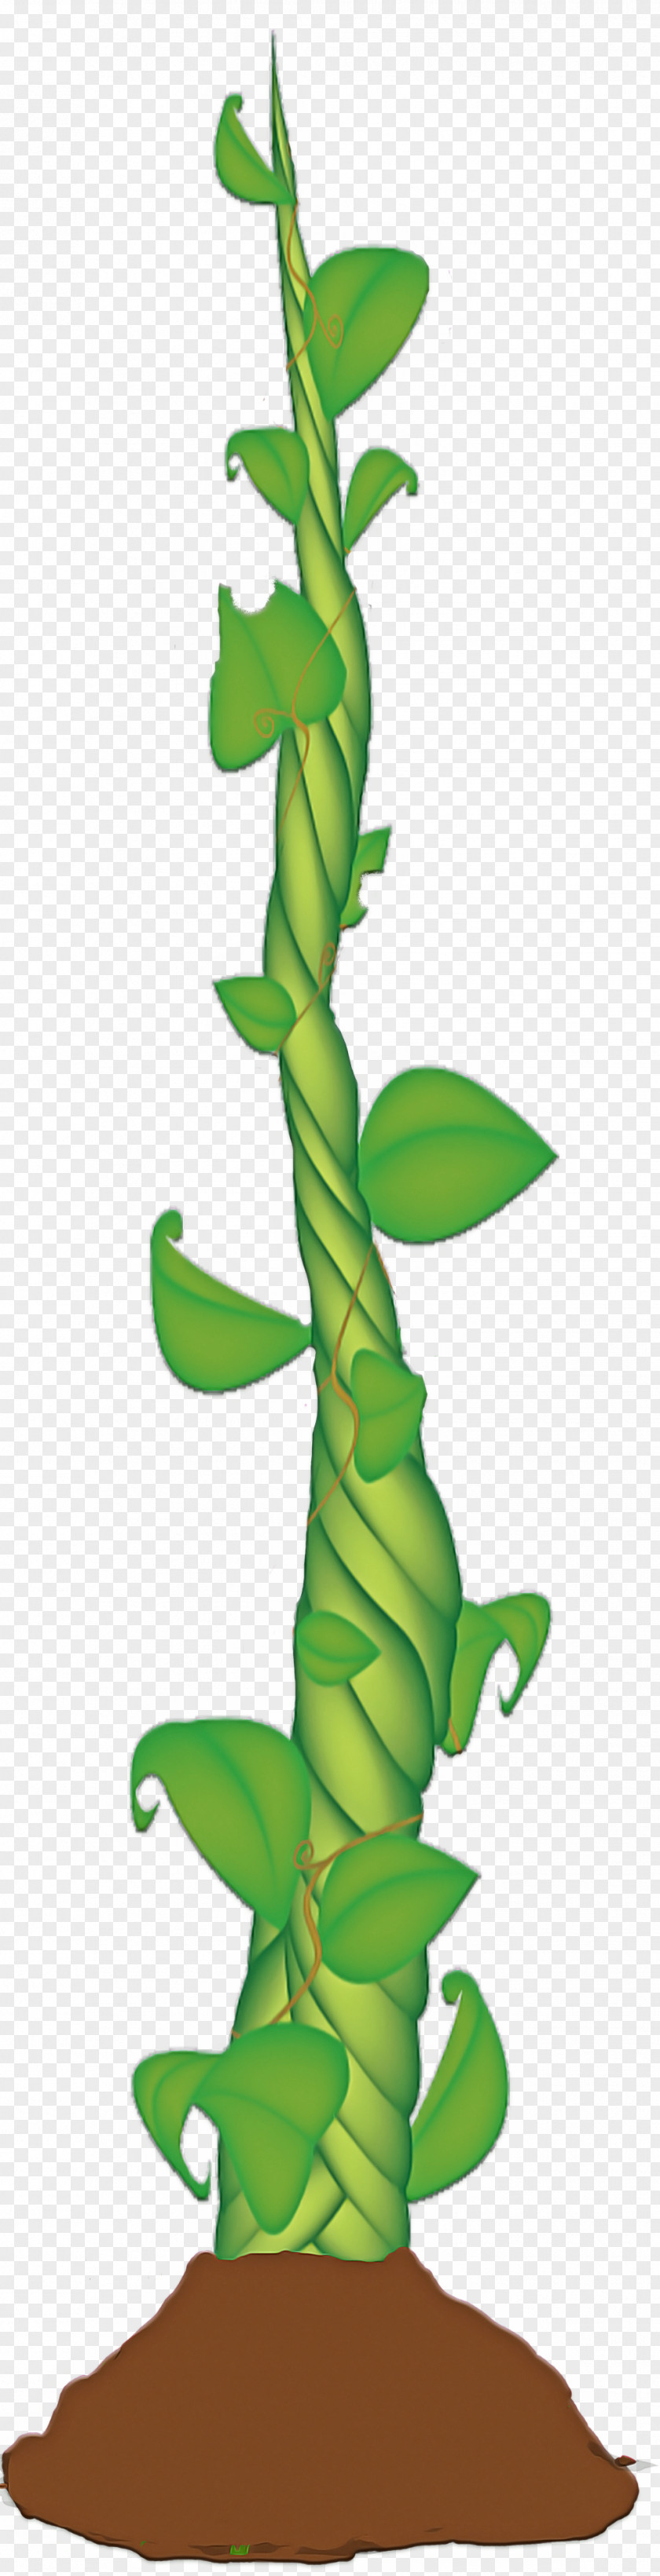 Leaf Plant Stem Cartoon Tree PNG